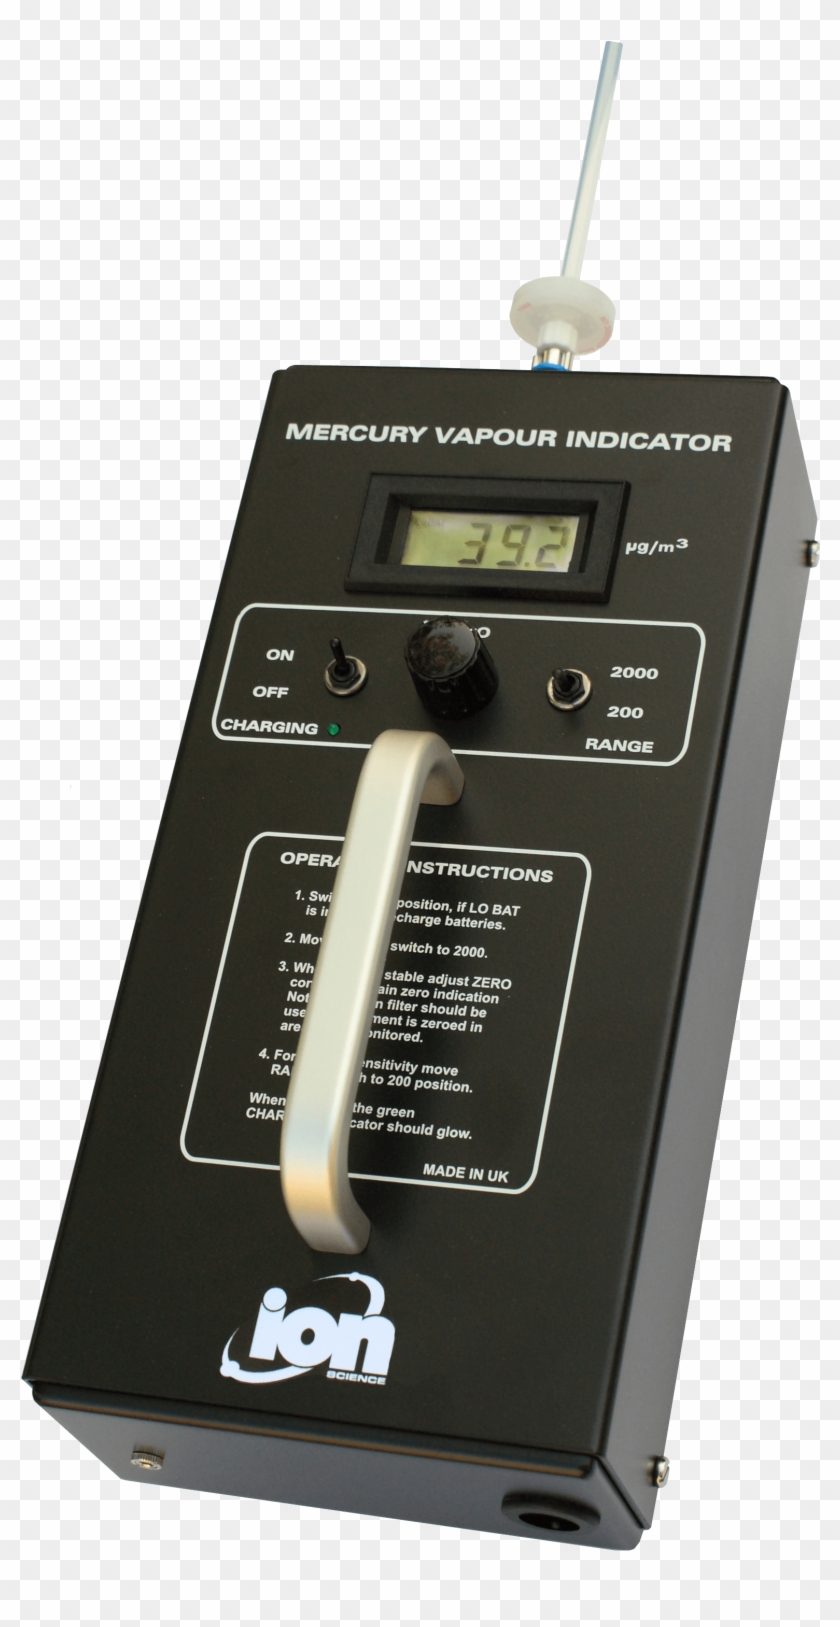 Mvi Mercury Vapor Indicator - Mercury Vapour Indicator Clipart #3096242